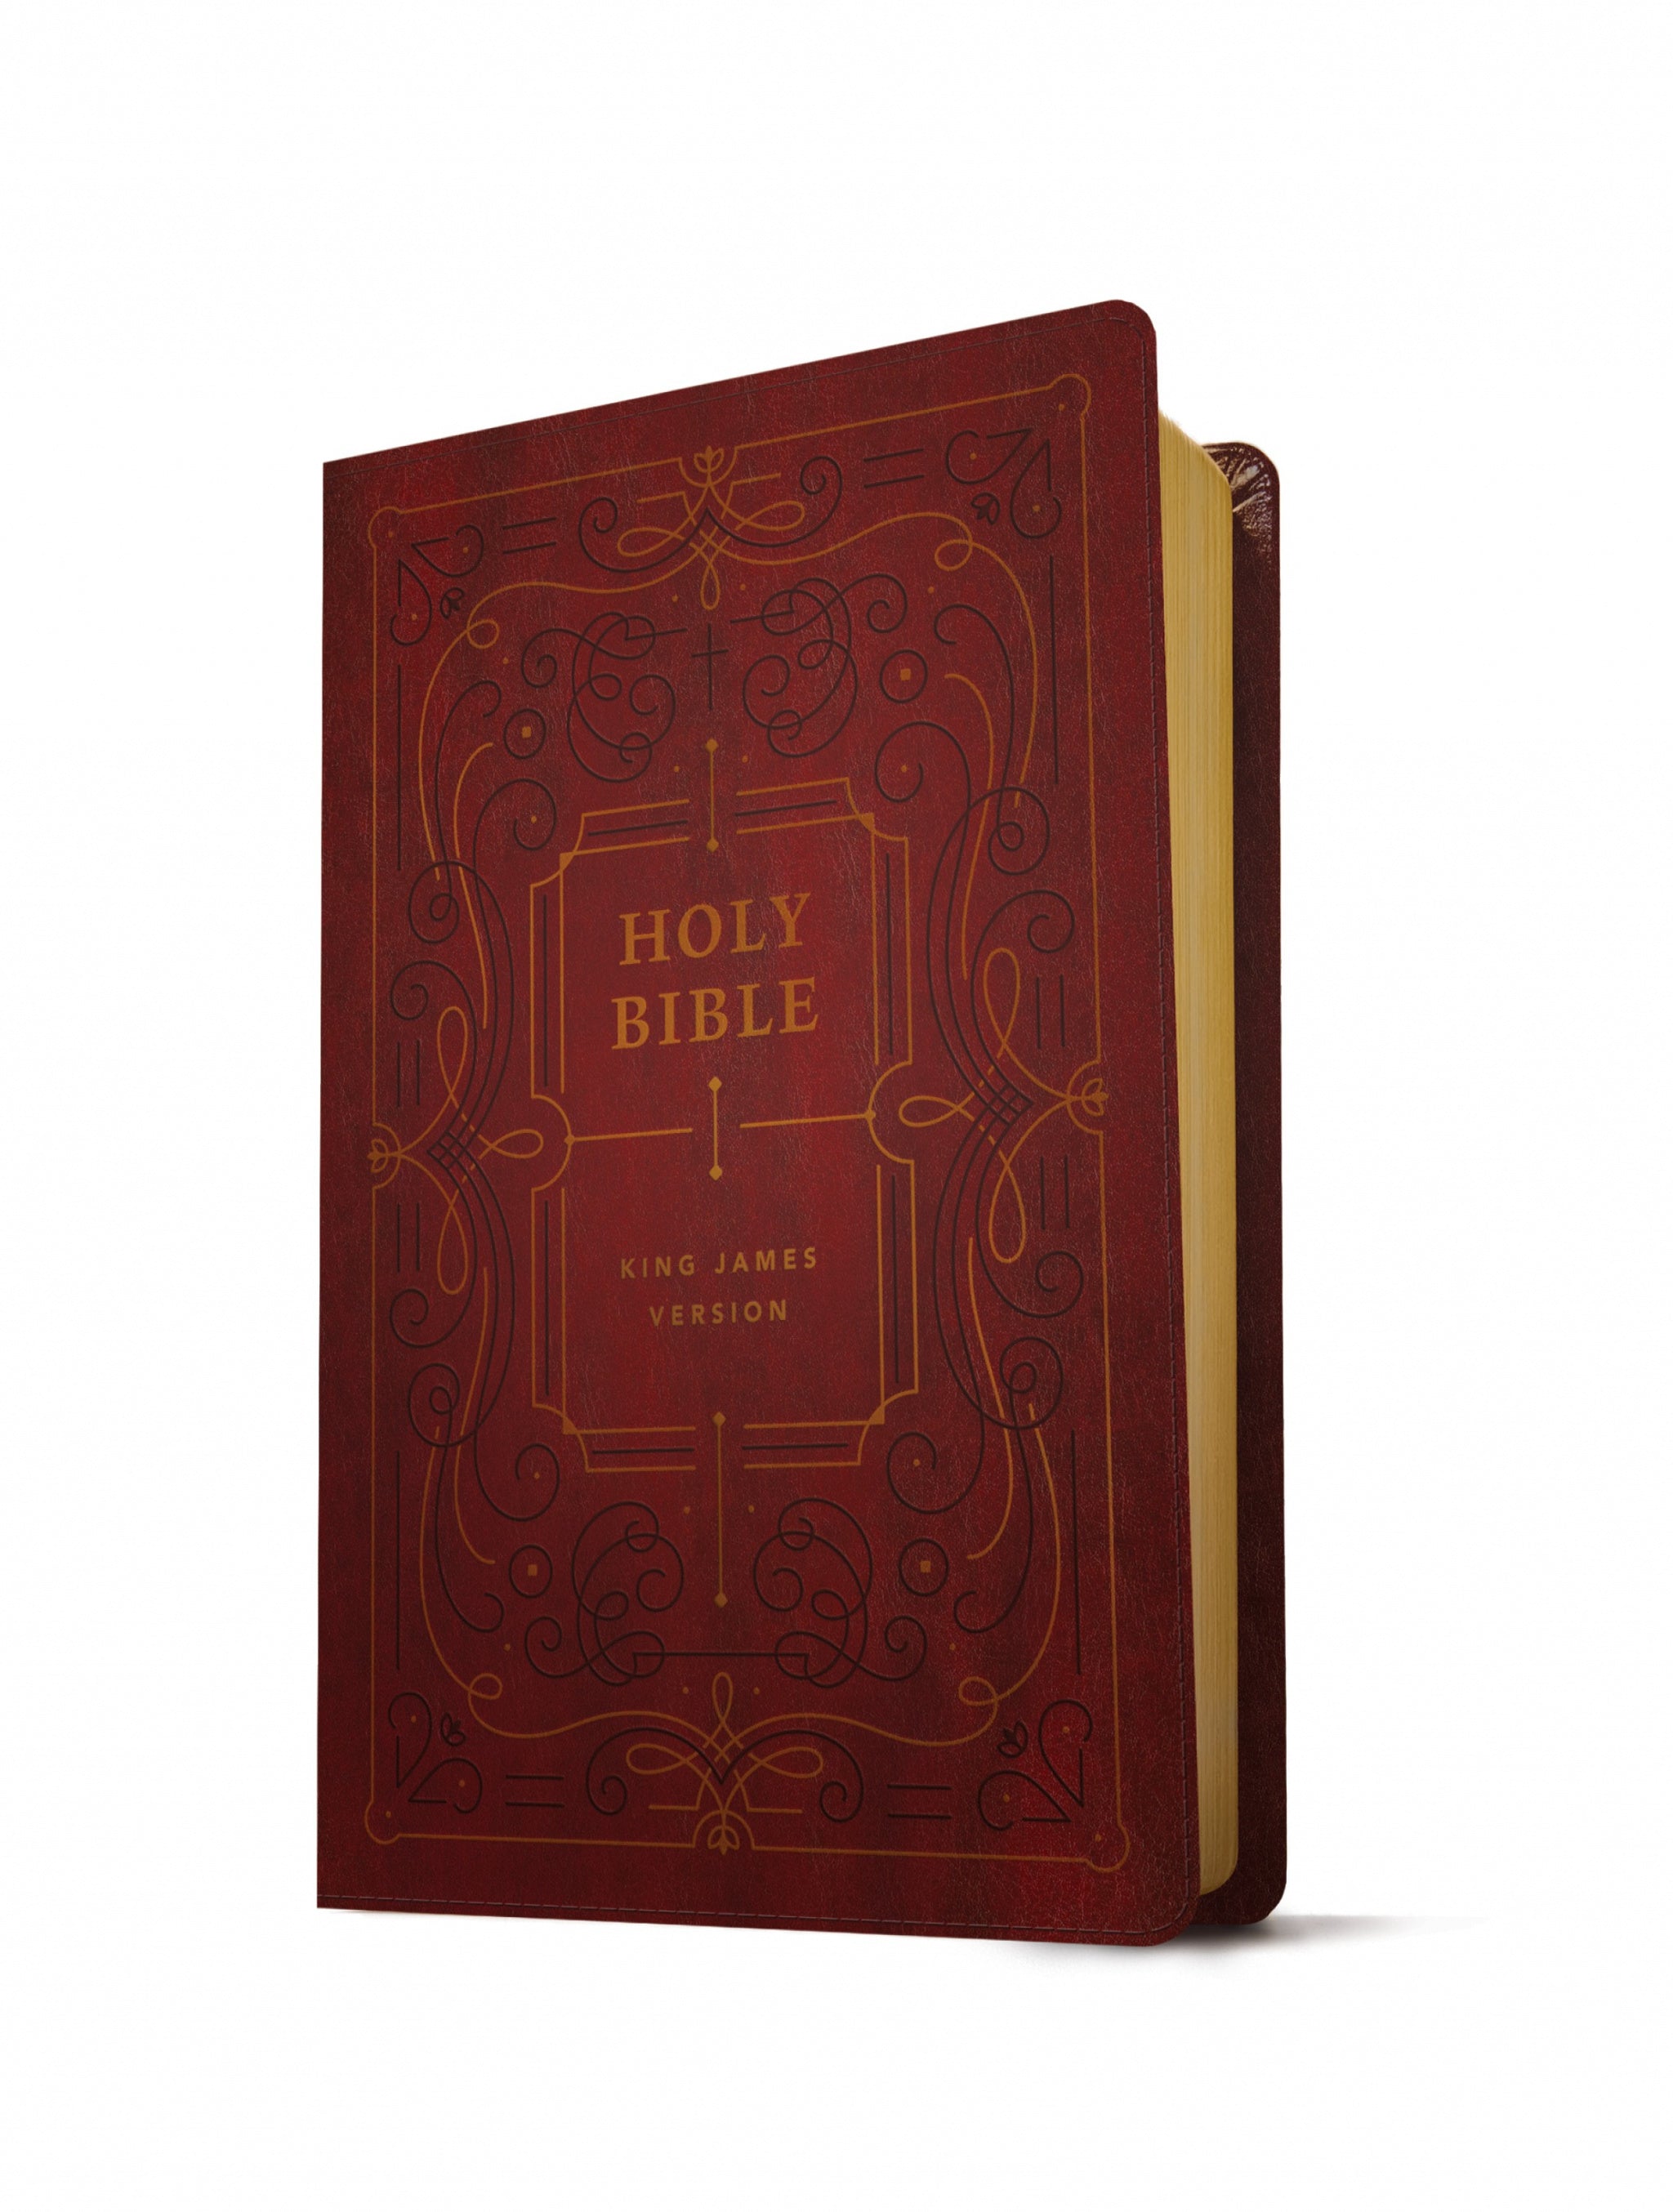 Image of KJV Large Print Thinline Reference Bible, Filament Enabled Edition (Red Letter, LeatherLike, Ornate Burgundy) other